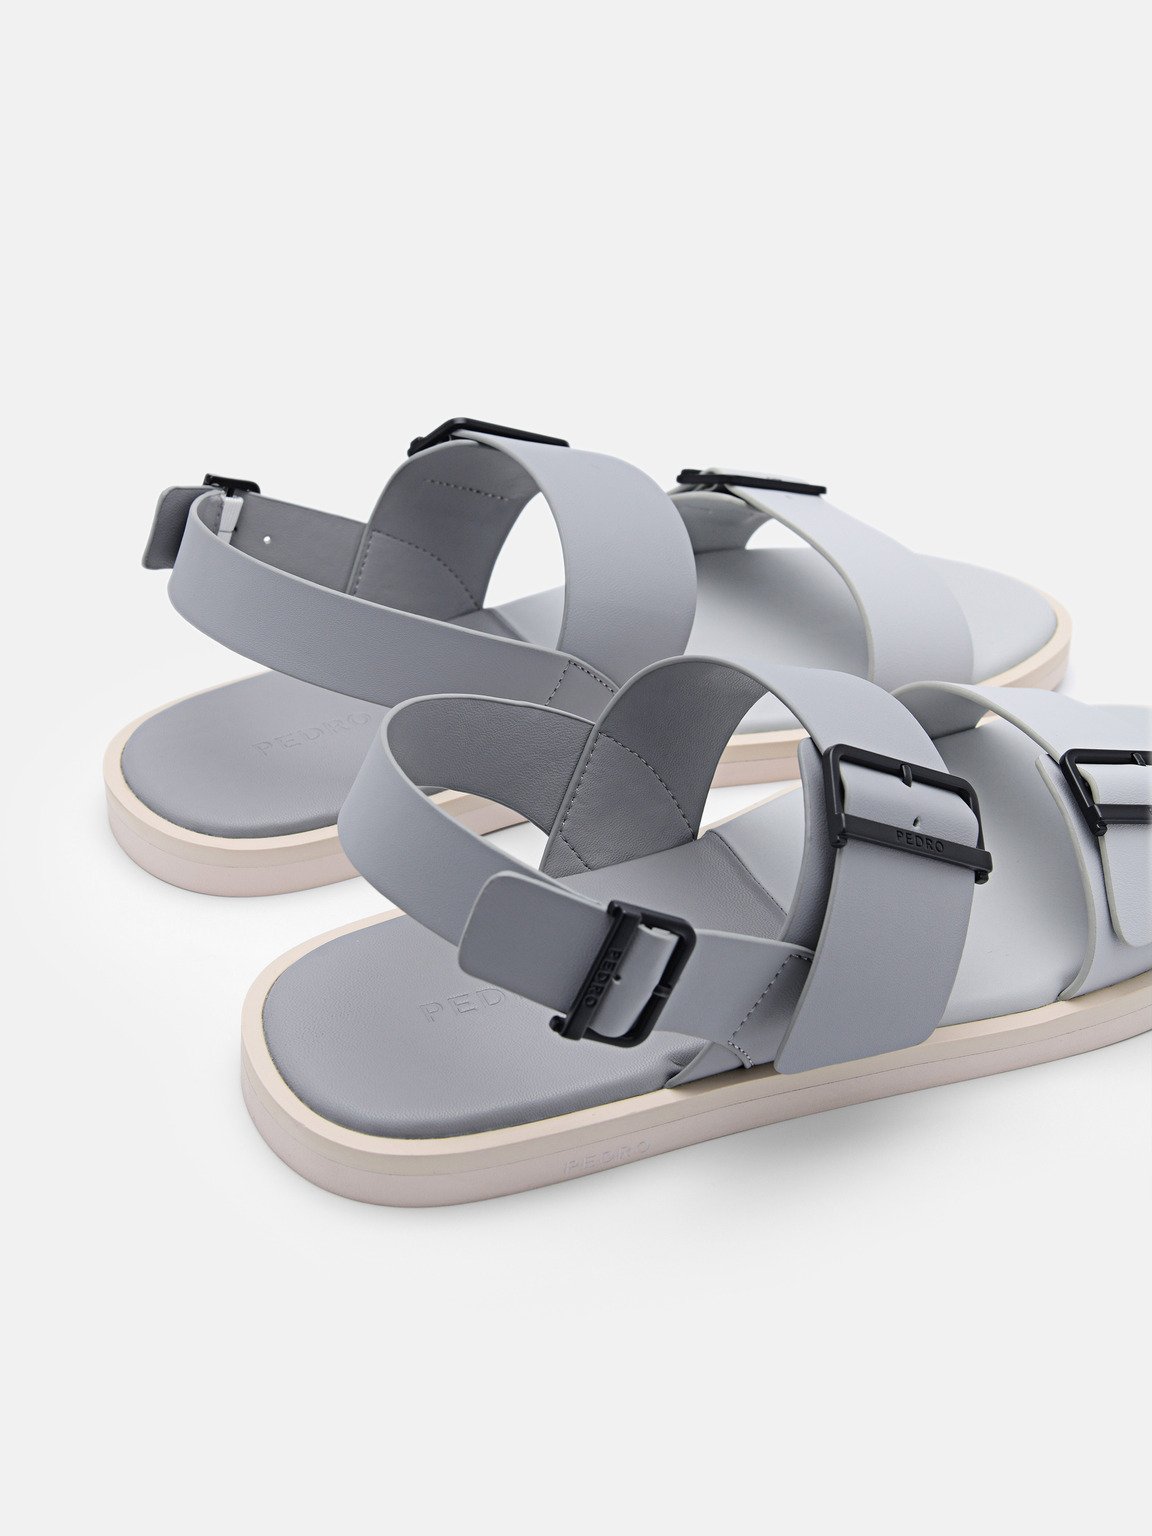 Ripley Backstrap Sandals, Grey